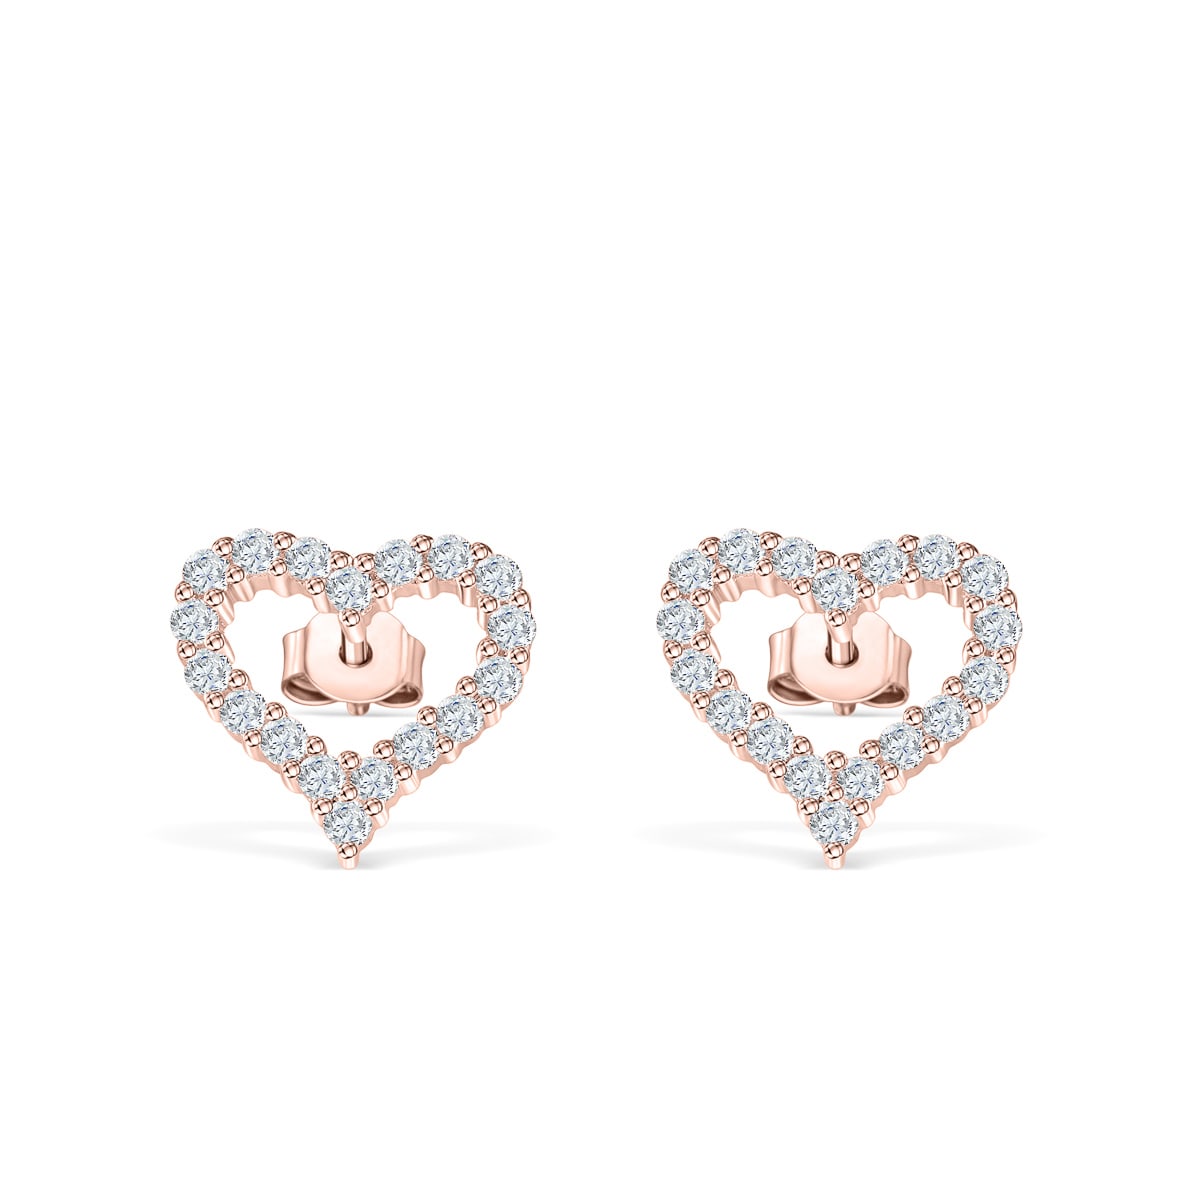 the jasmine rose gold heart shaped earrings